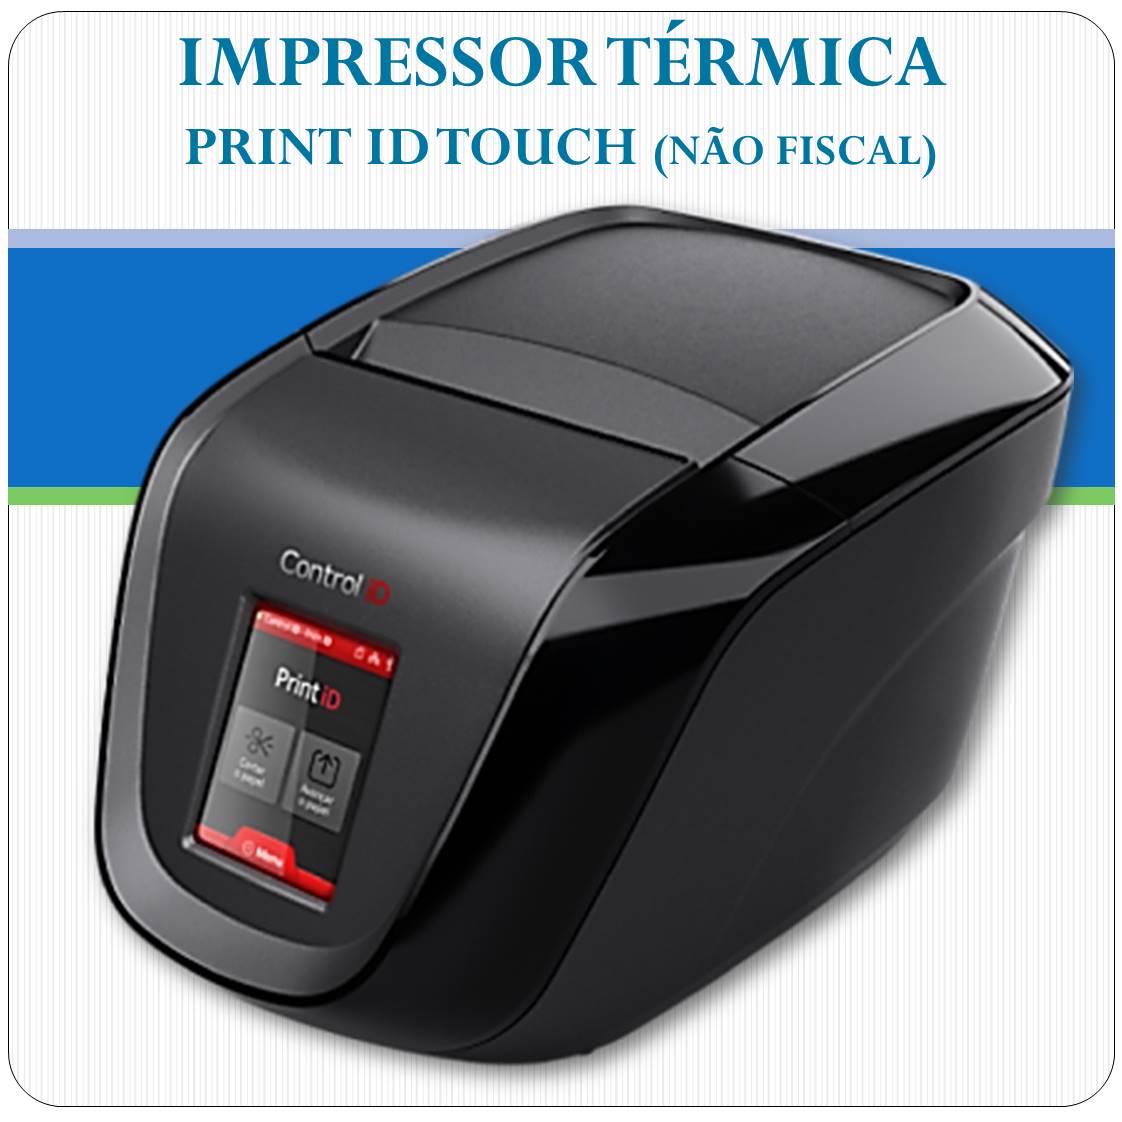 Impressora Térmica - Print Id Touch - TCP/IP e USB